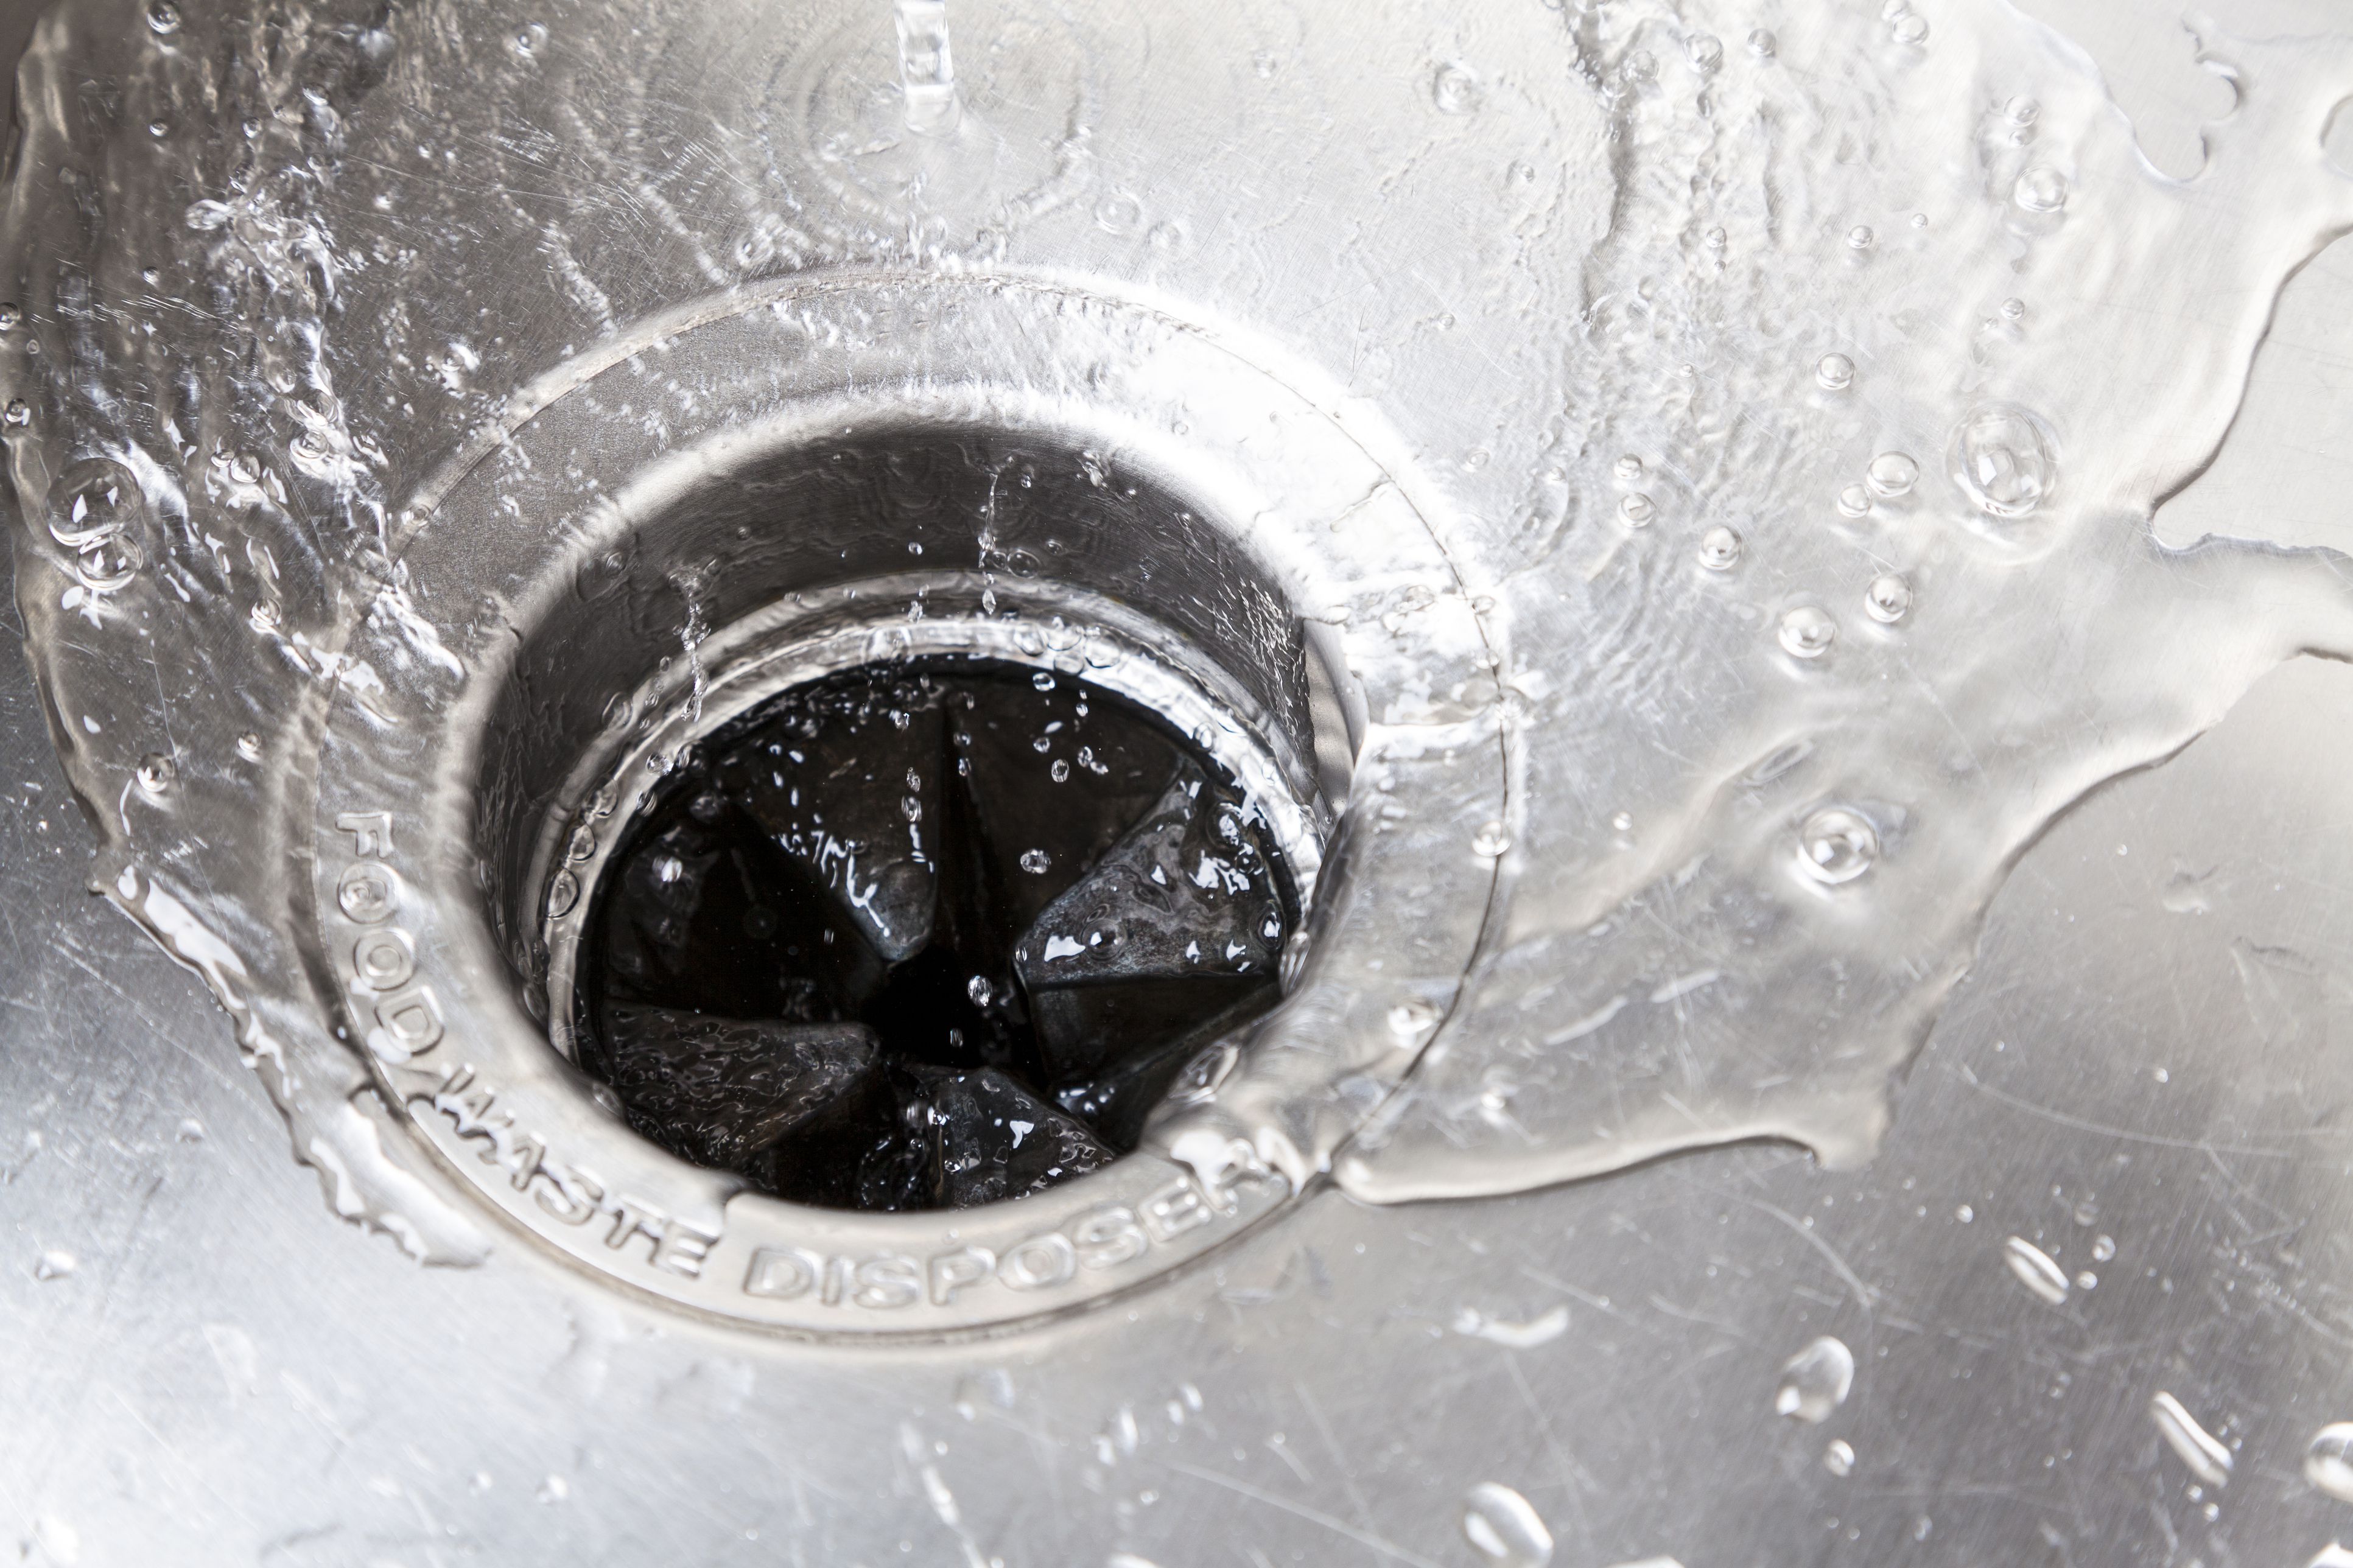 kitchen sink won't drain no garbage disposal